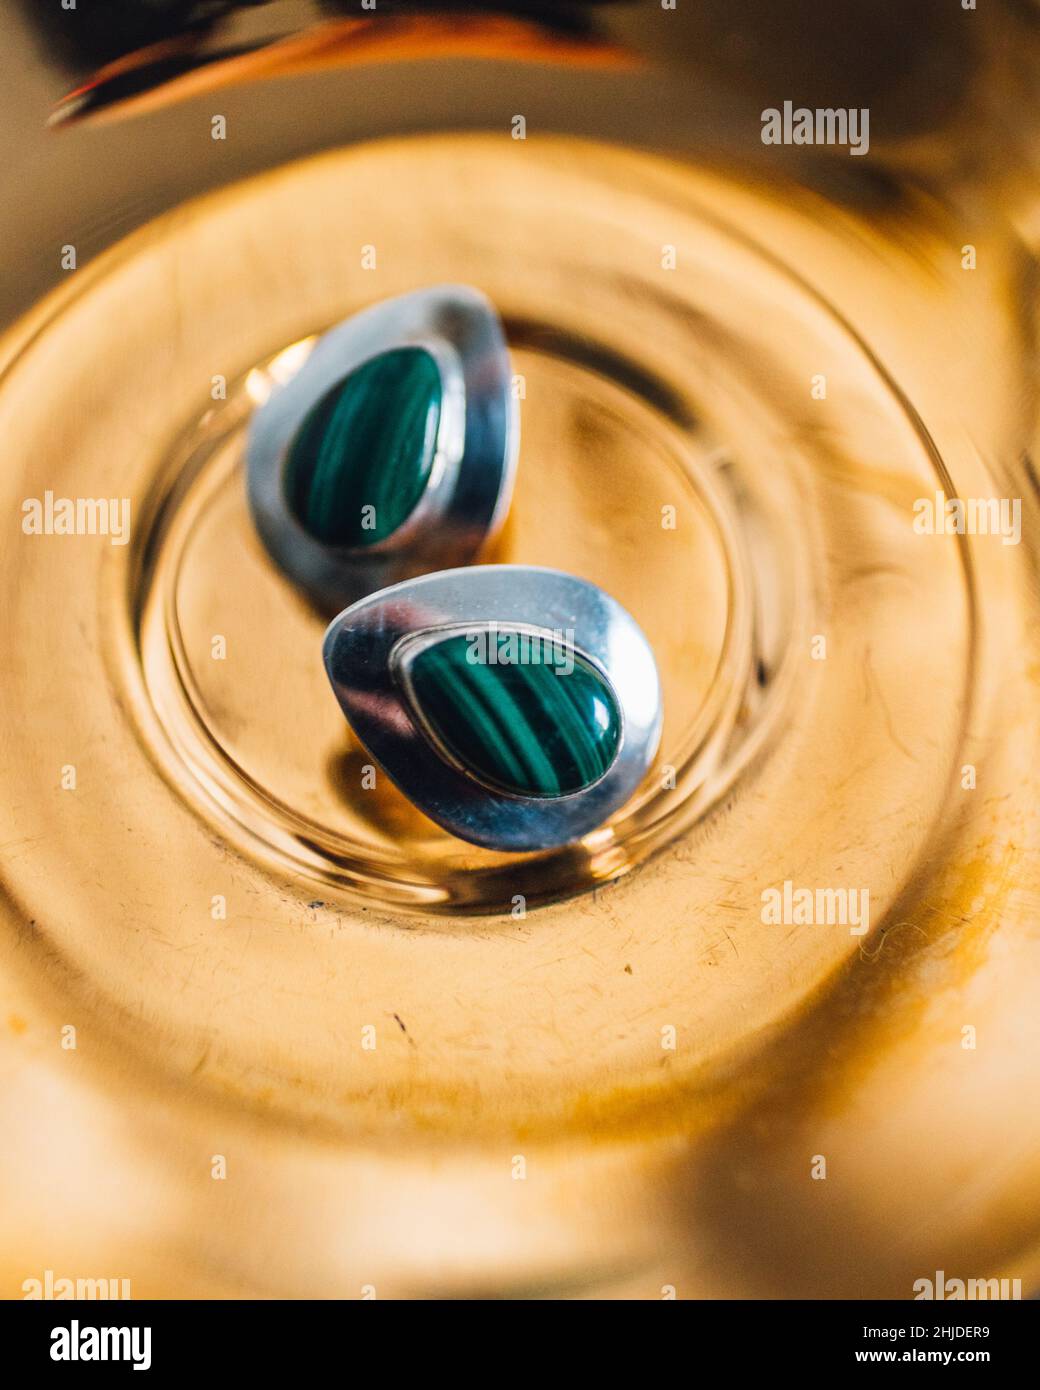 green malachite stone in sterling silver teardrop earrings on metallic gold saucer Stock Photo